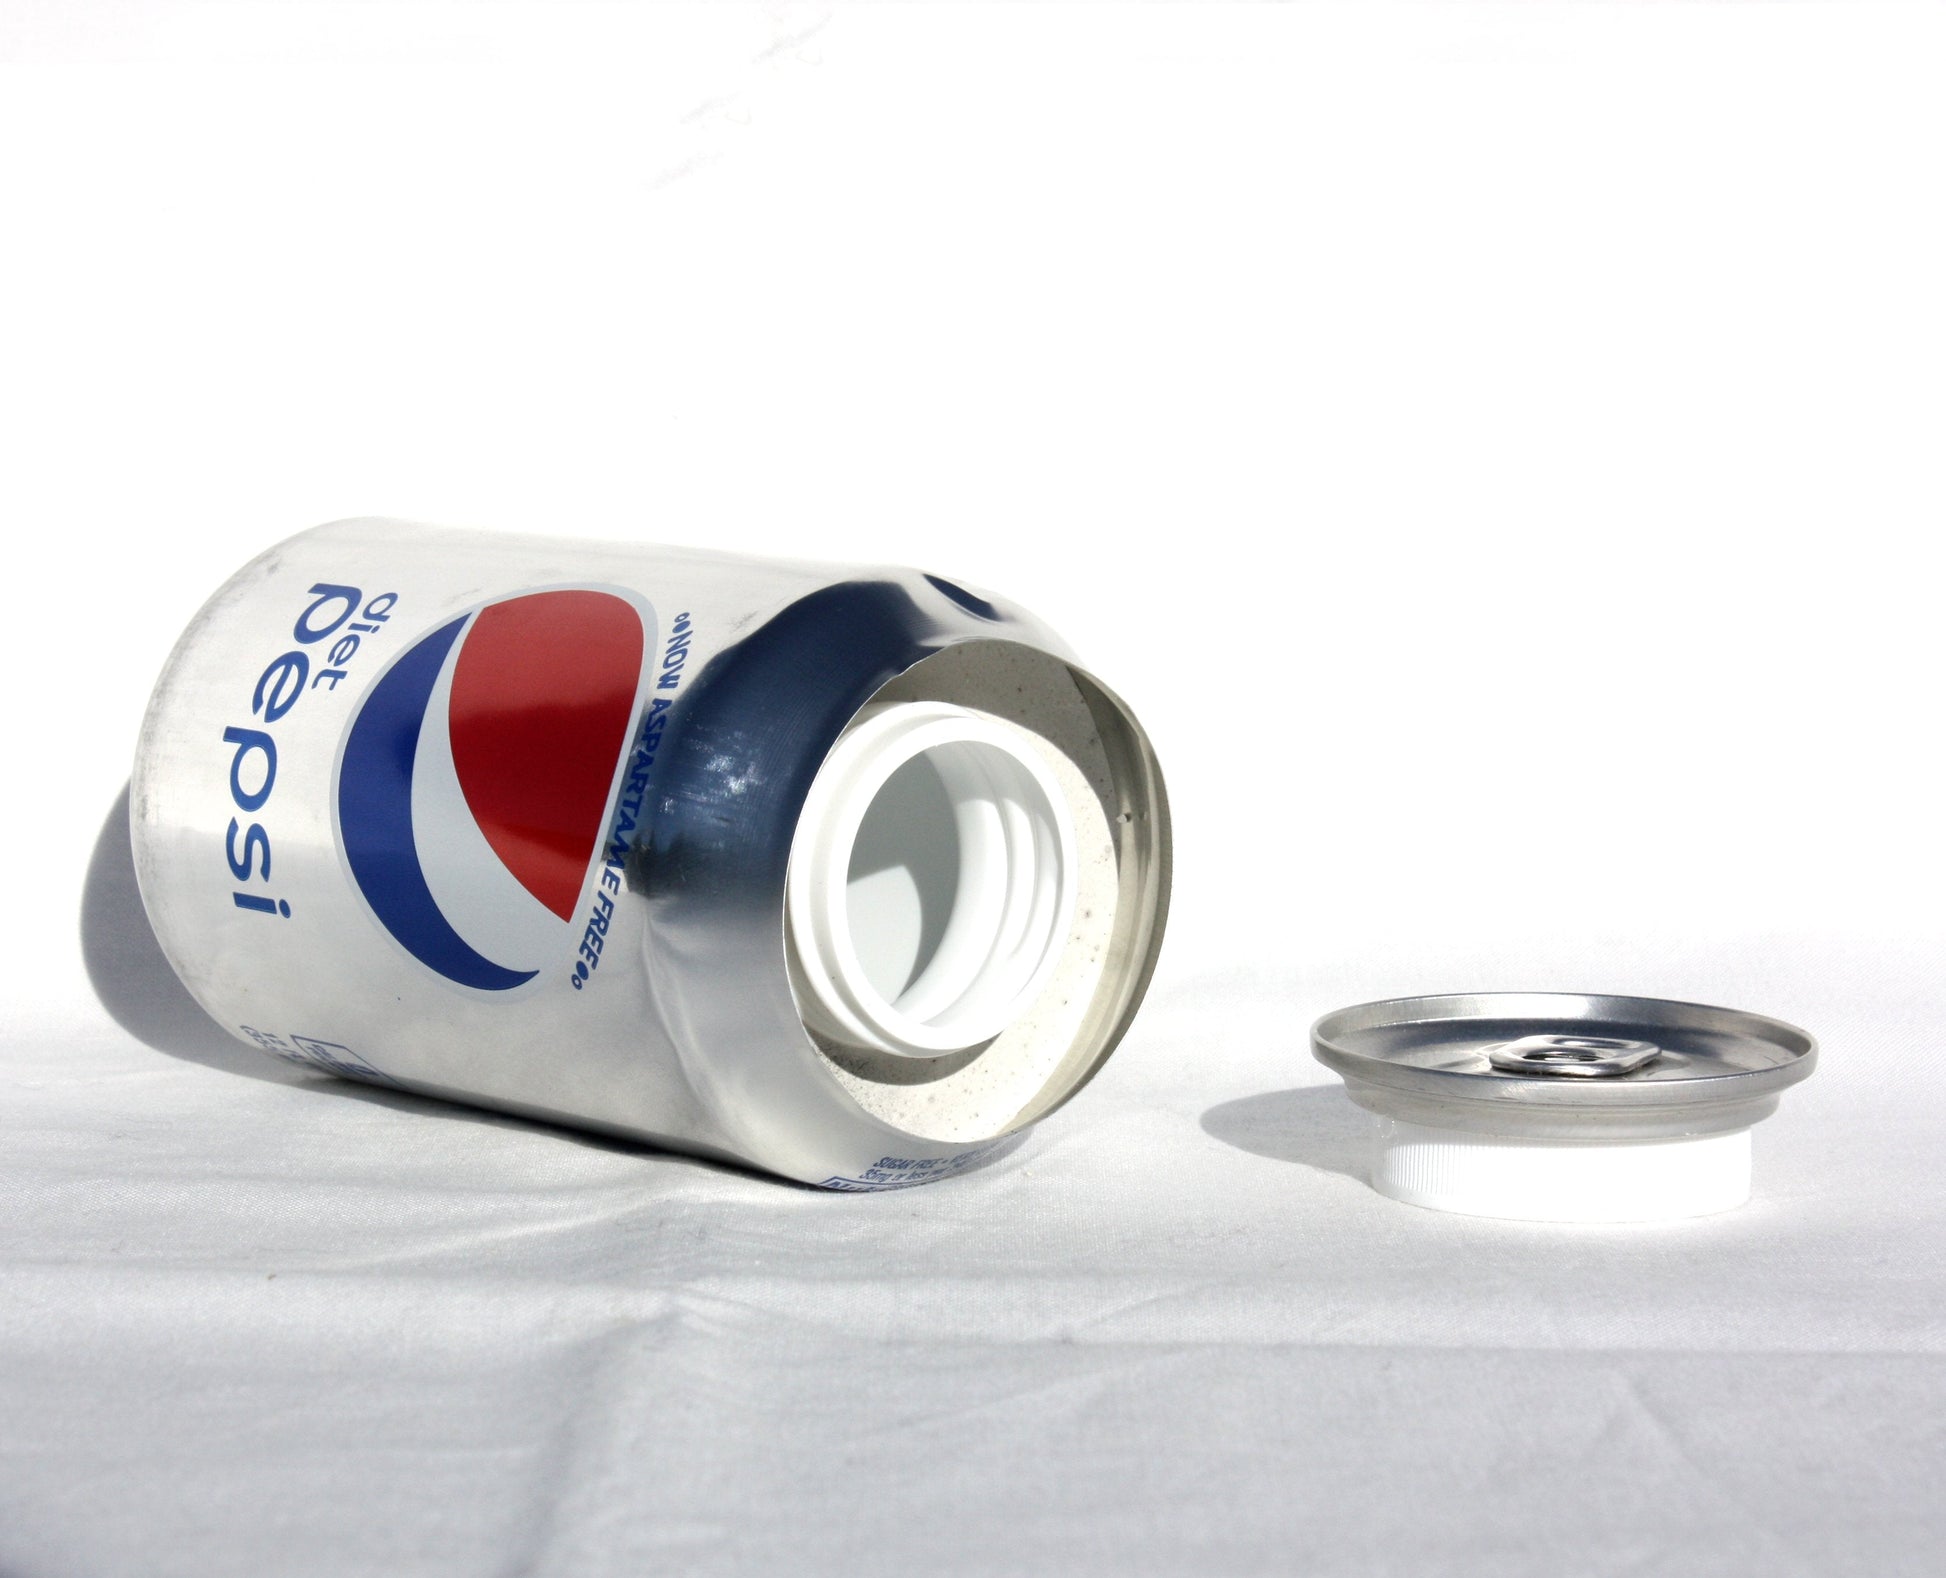 Diet Pepsi Soda Can Diversion Safe Stash Can - Concealment Cans